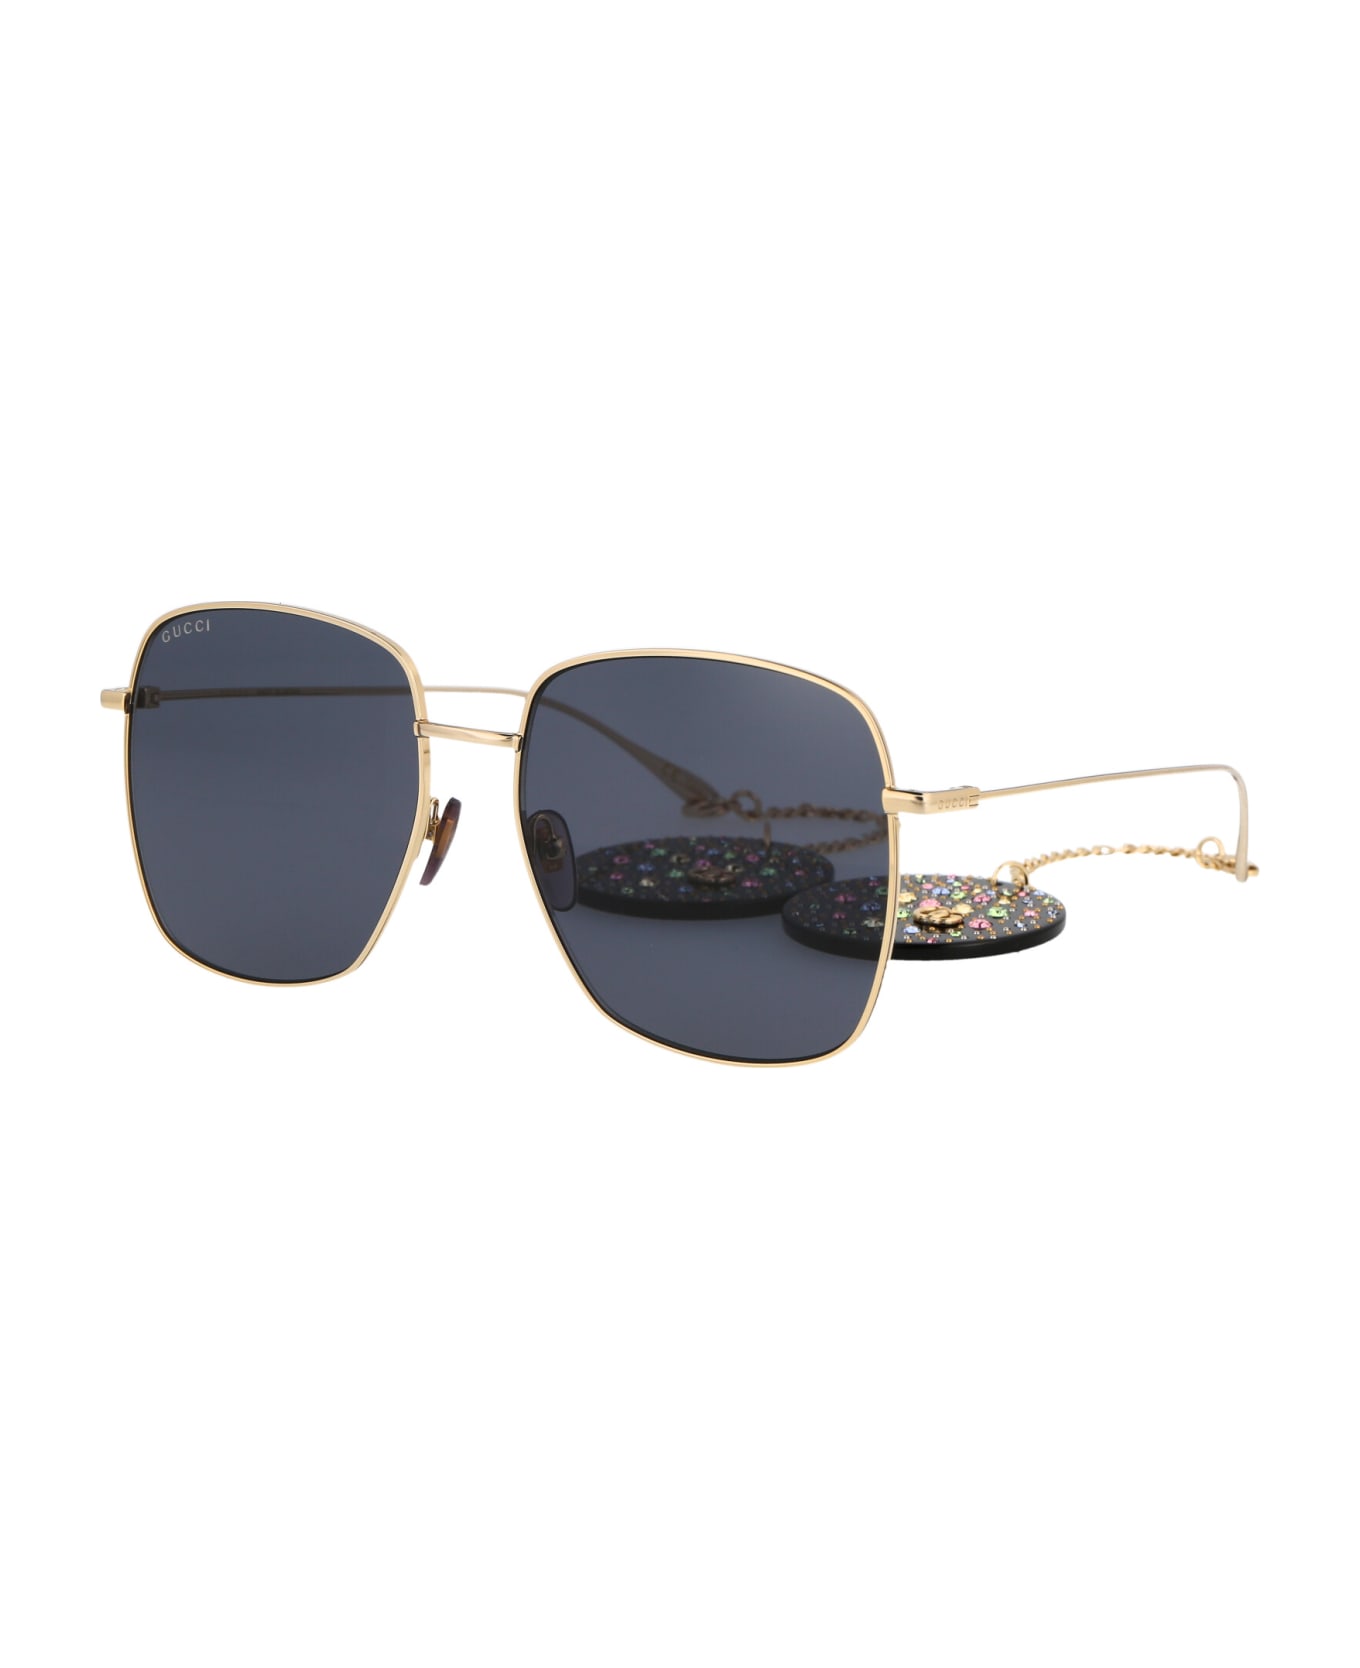 Gucci Eyewear Gg1031s Sunglasses - 009 GOLD GOLD GREY